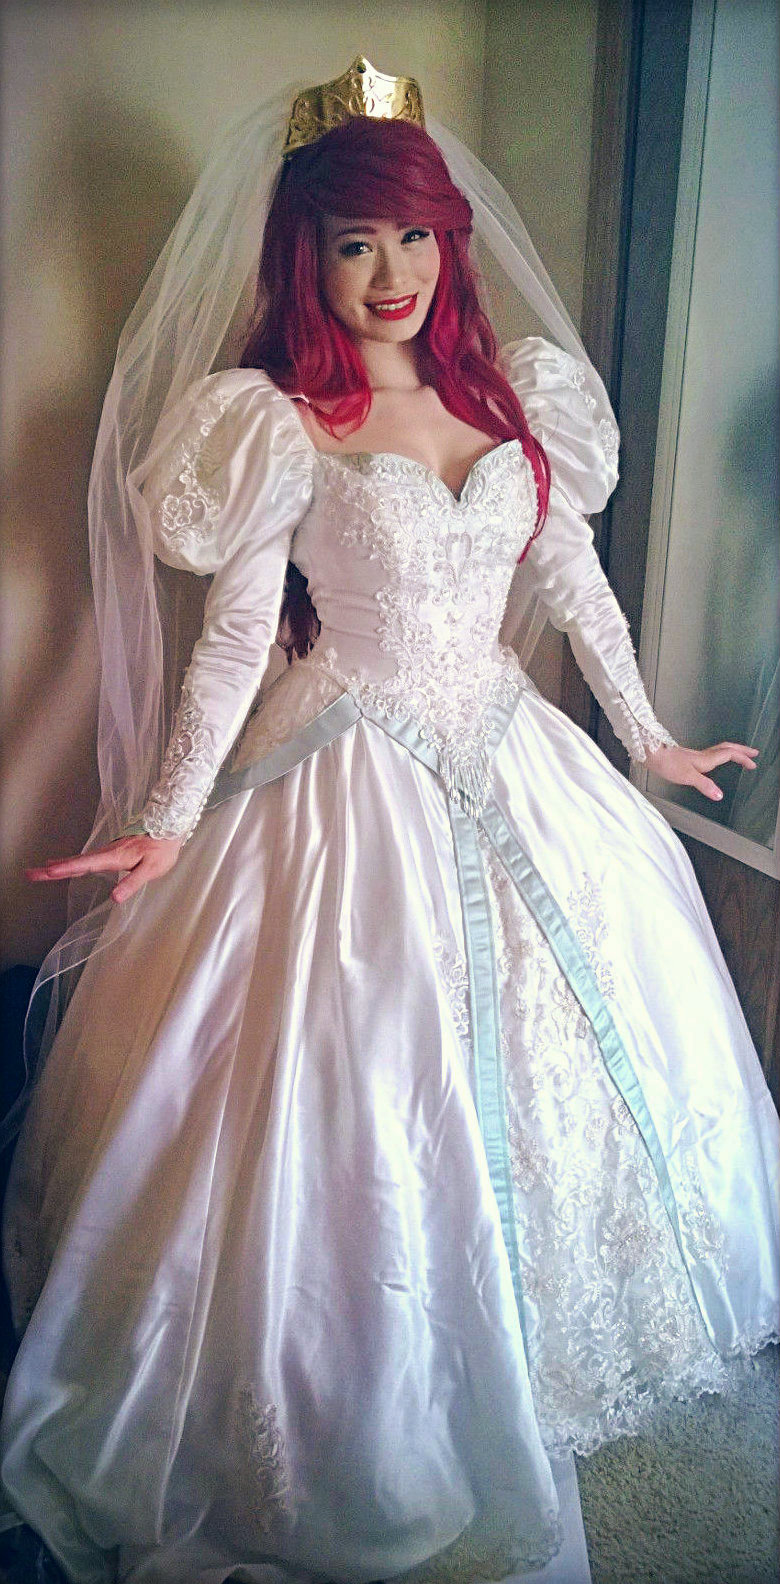 ariel's wedding dress